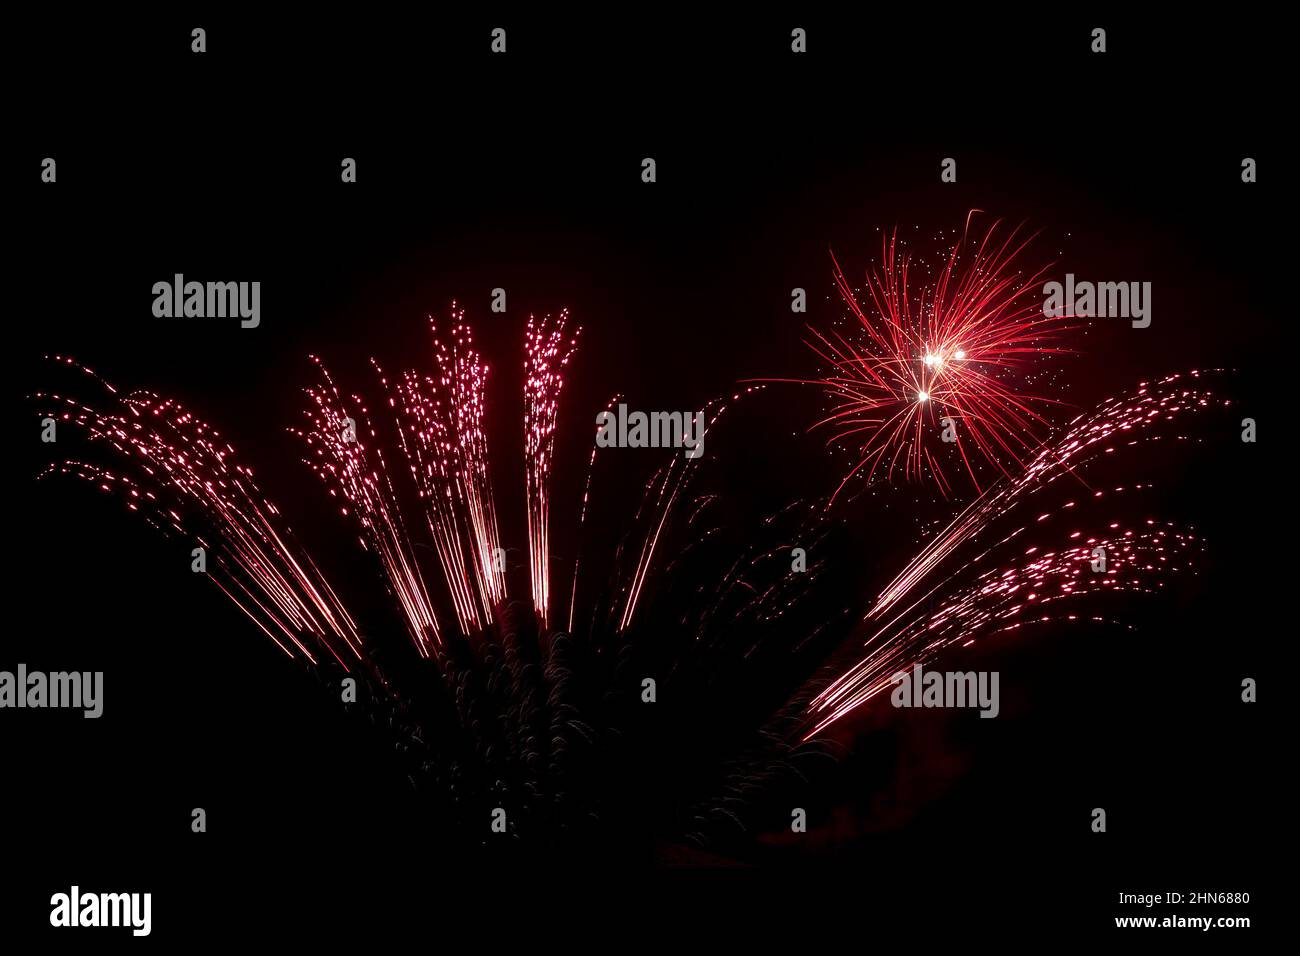 Fireworks isolated on dark background. Stock Photo